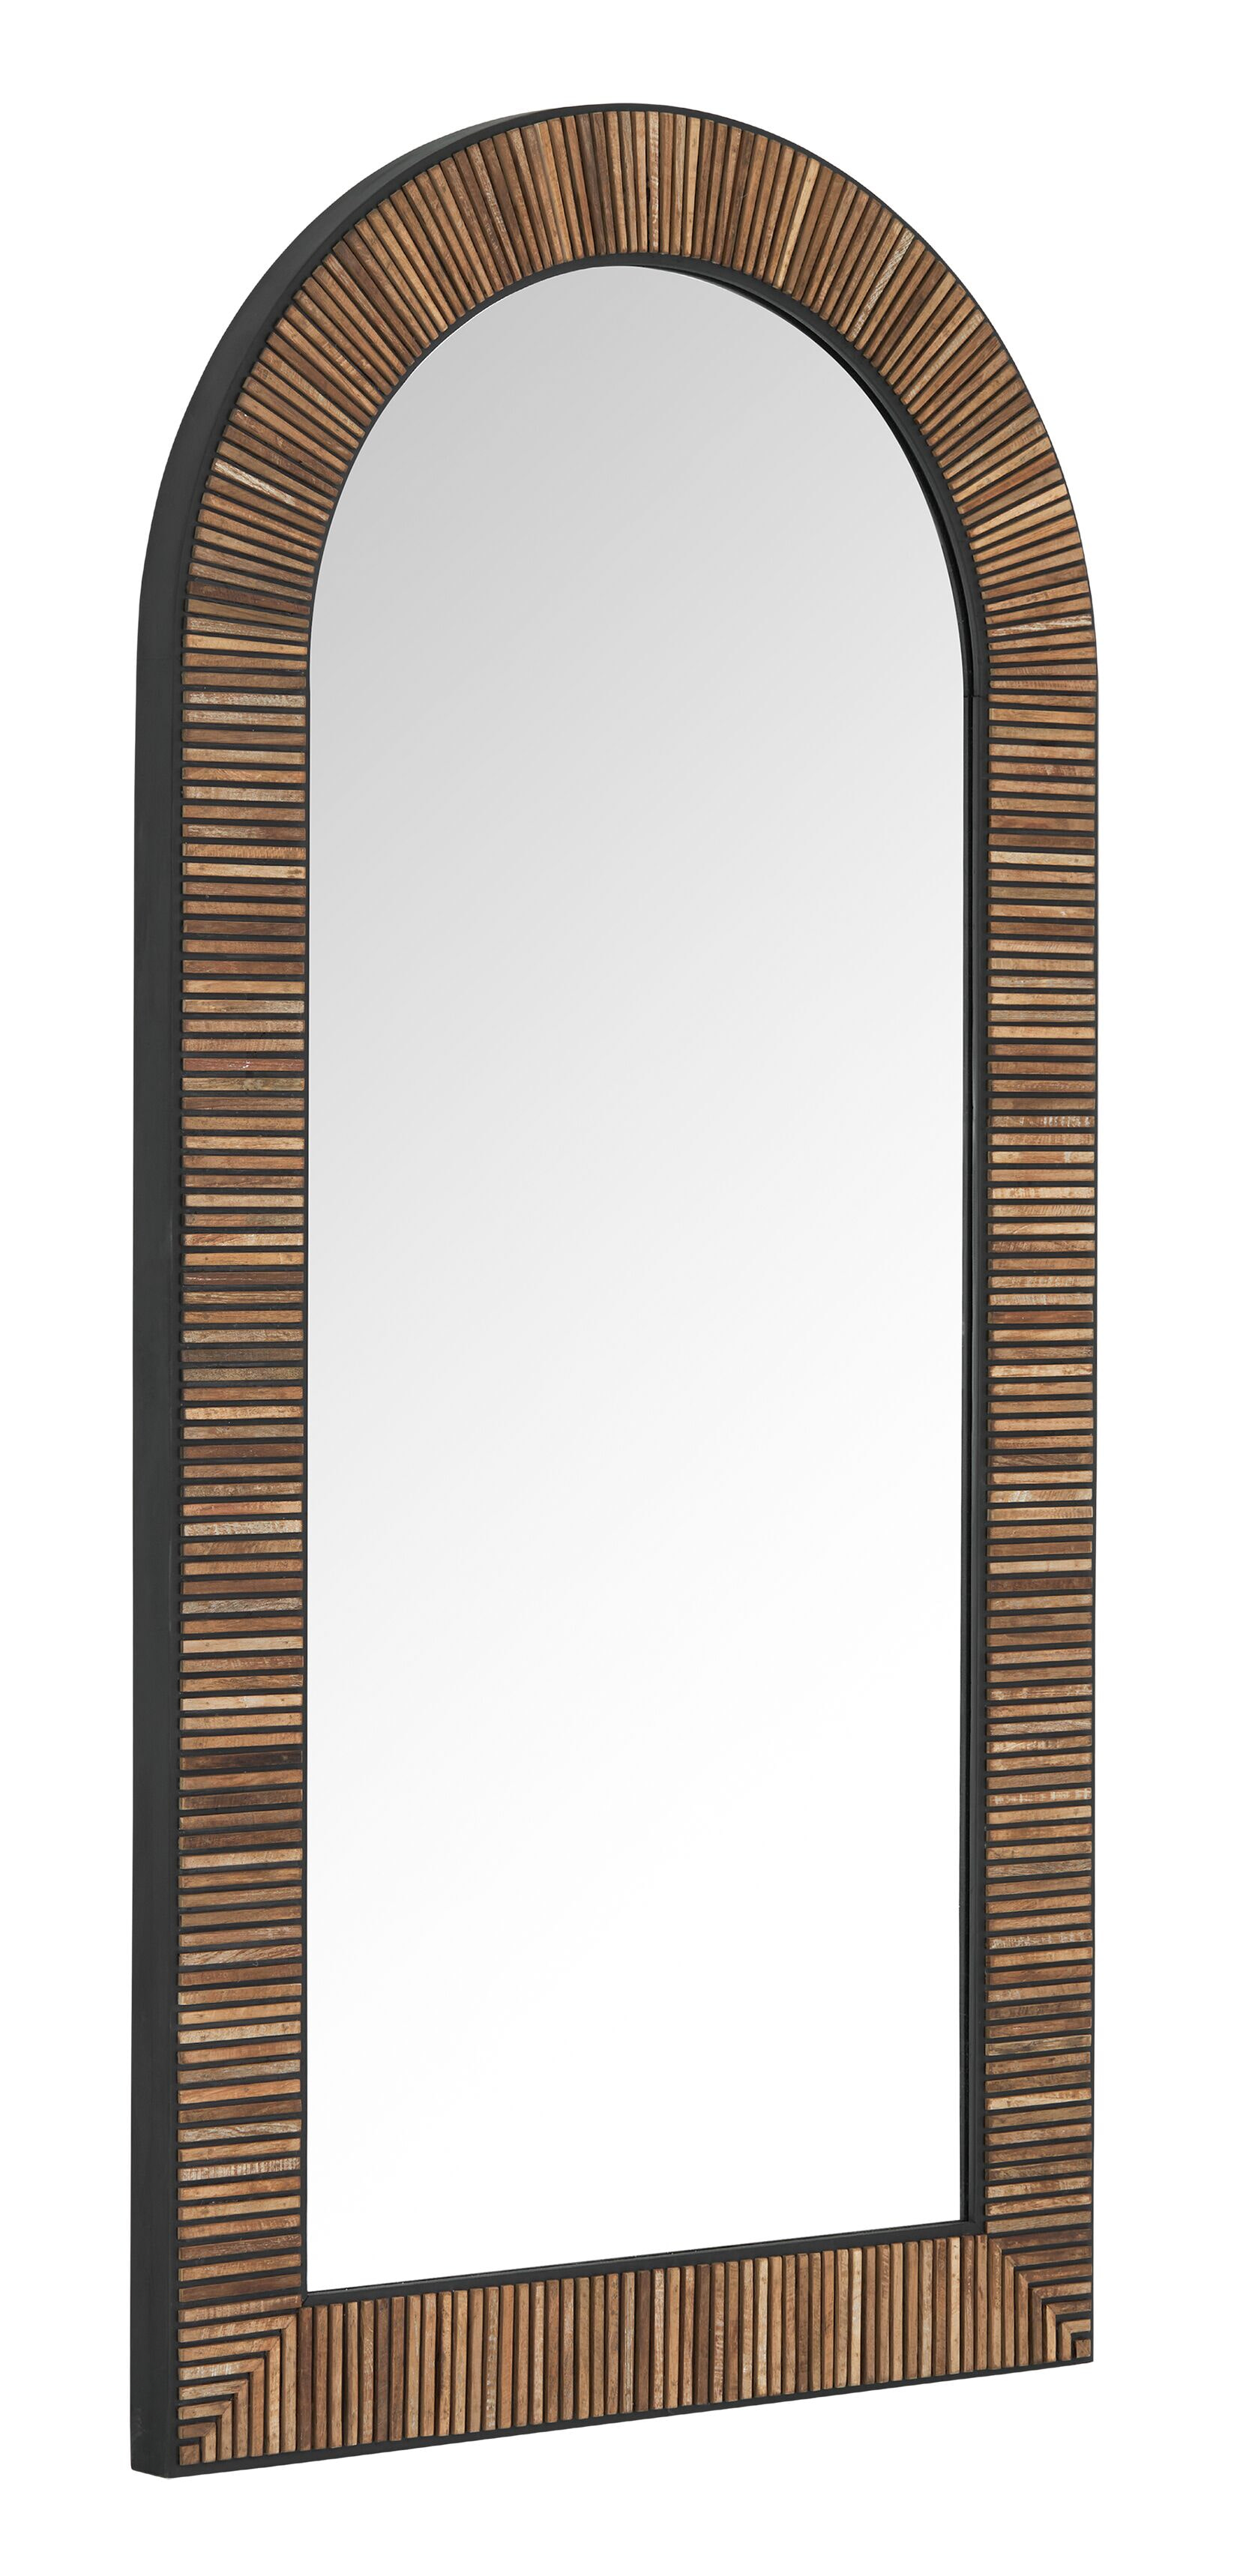 DTP Home Spiegel Slats Teakhout, 200 x 100cm - Bruin